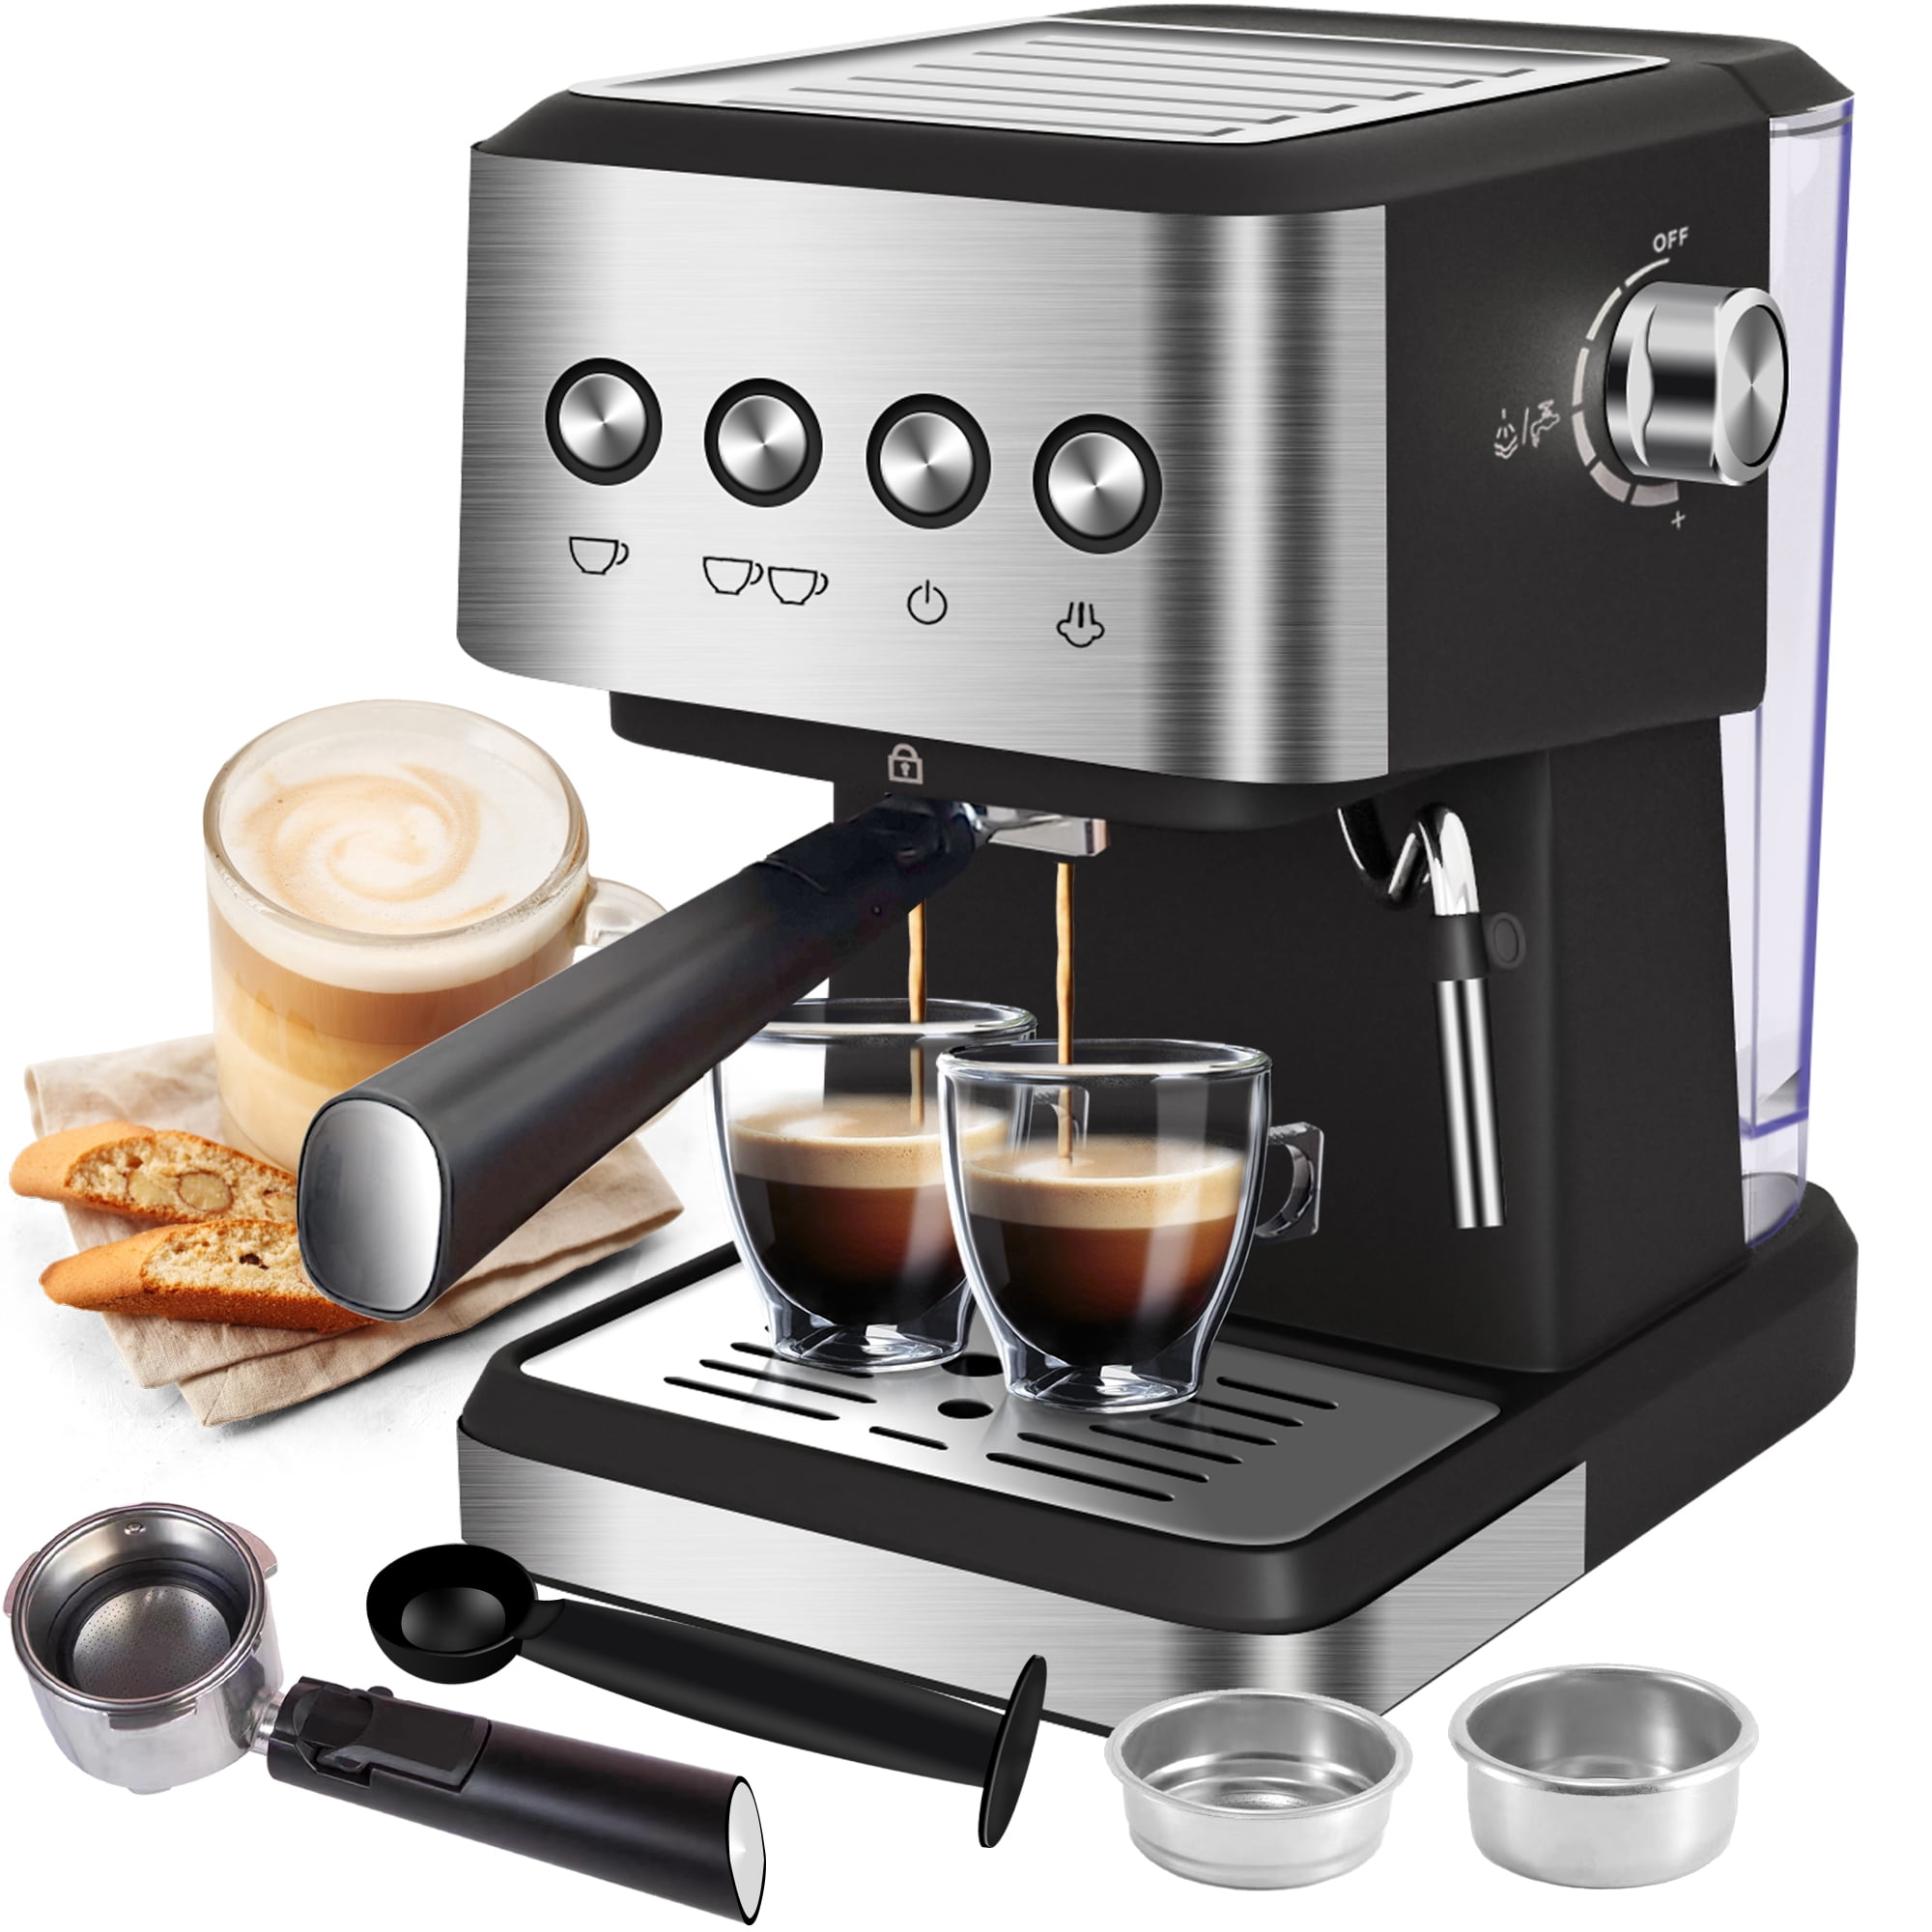 Espresso Machine 20 Bar, 1.5L Water Tank Milk Frother Steam, Stainless Steel Coffee Maker, Silver - Walmart.com